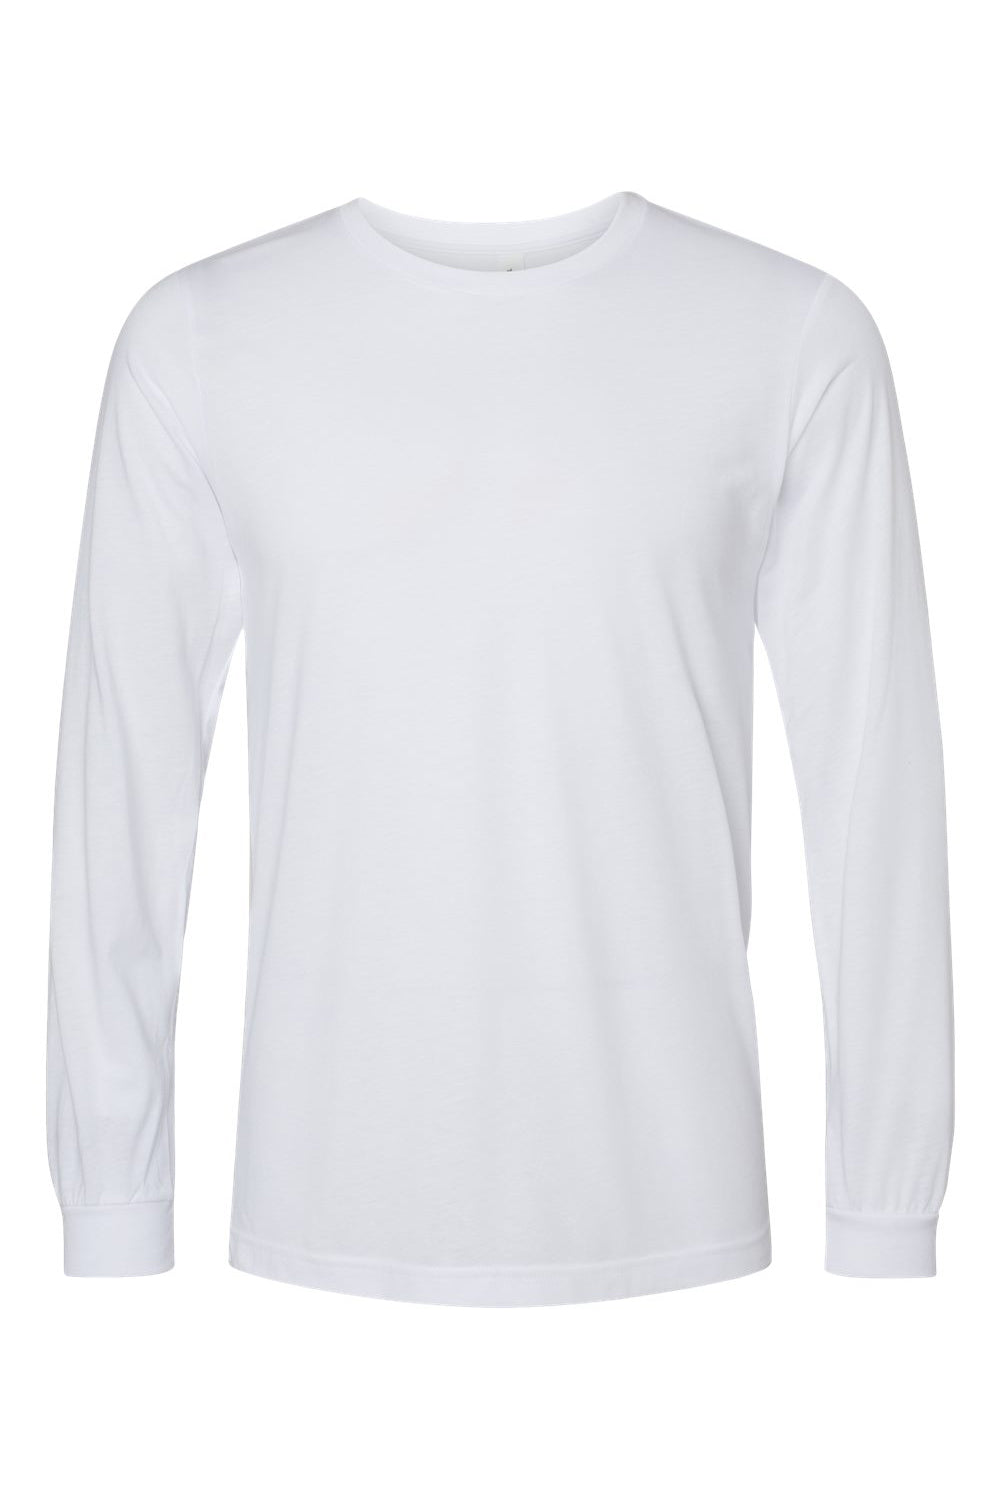 Bella + Canvas BC3513 Mens Long Sleeve Crewneck T-Shirt Solid White Flat Front